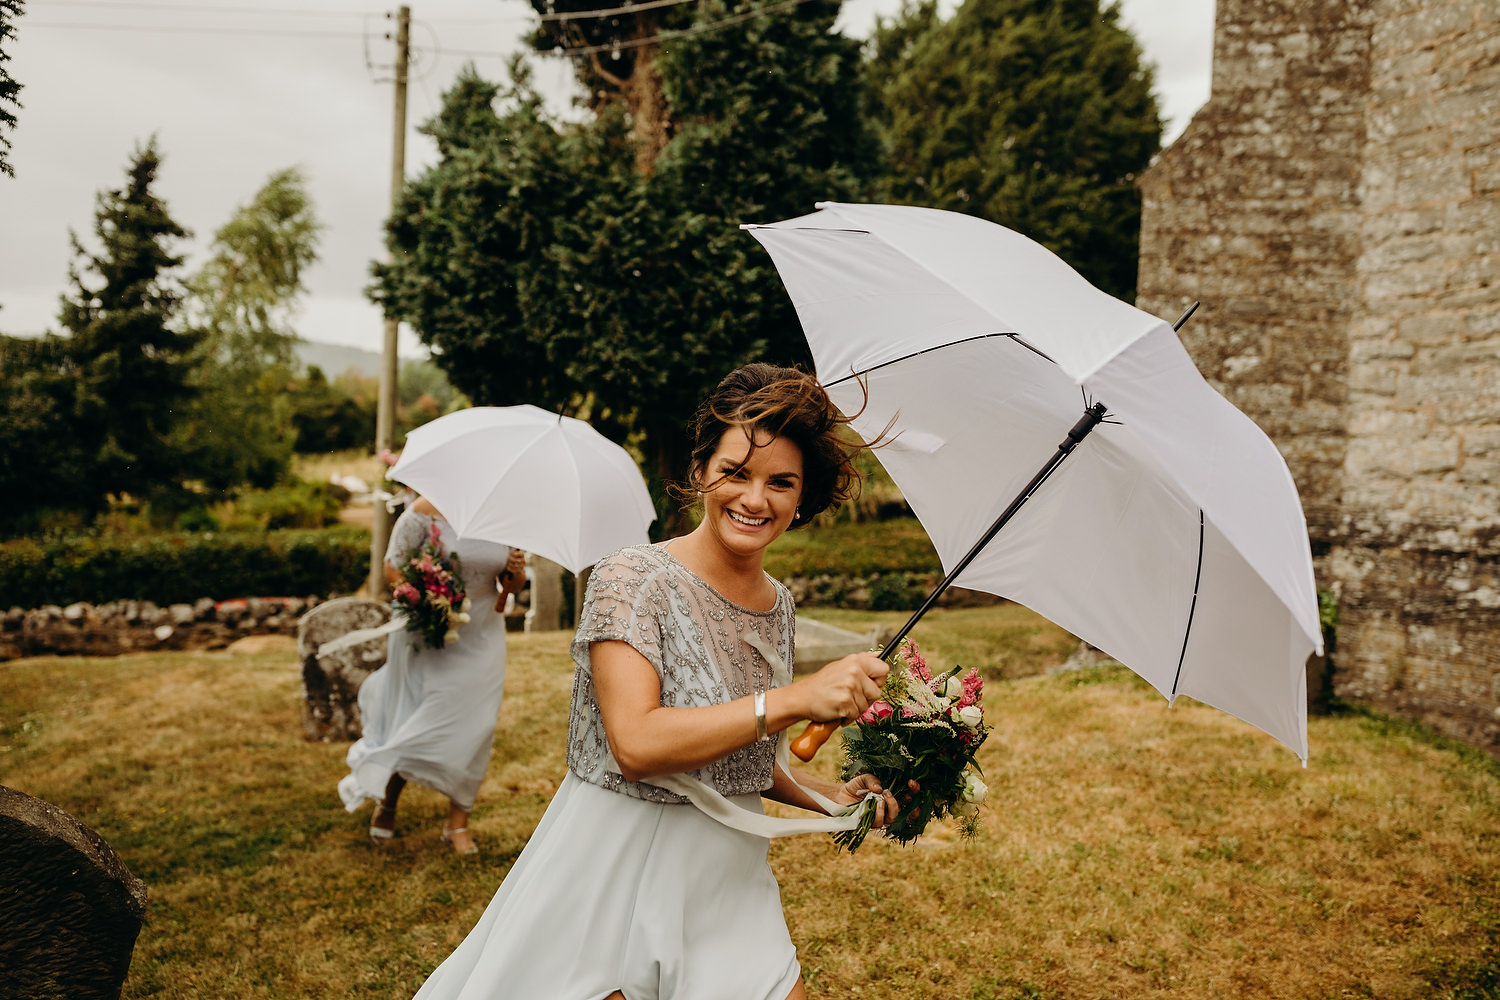 bridesmaid running with umbrella at rainy wdding